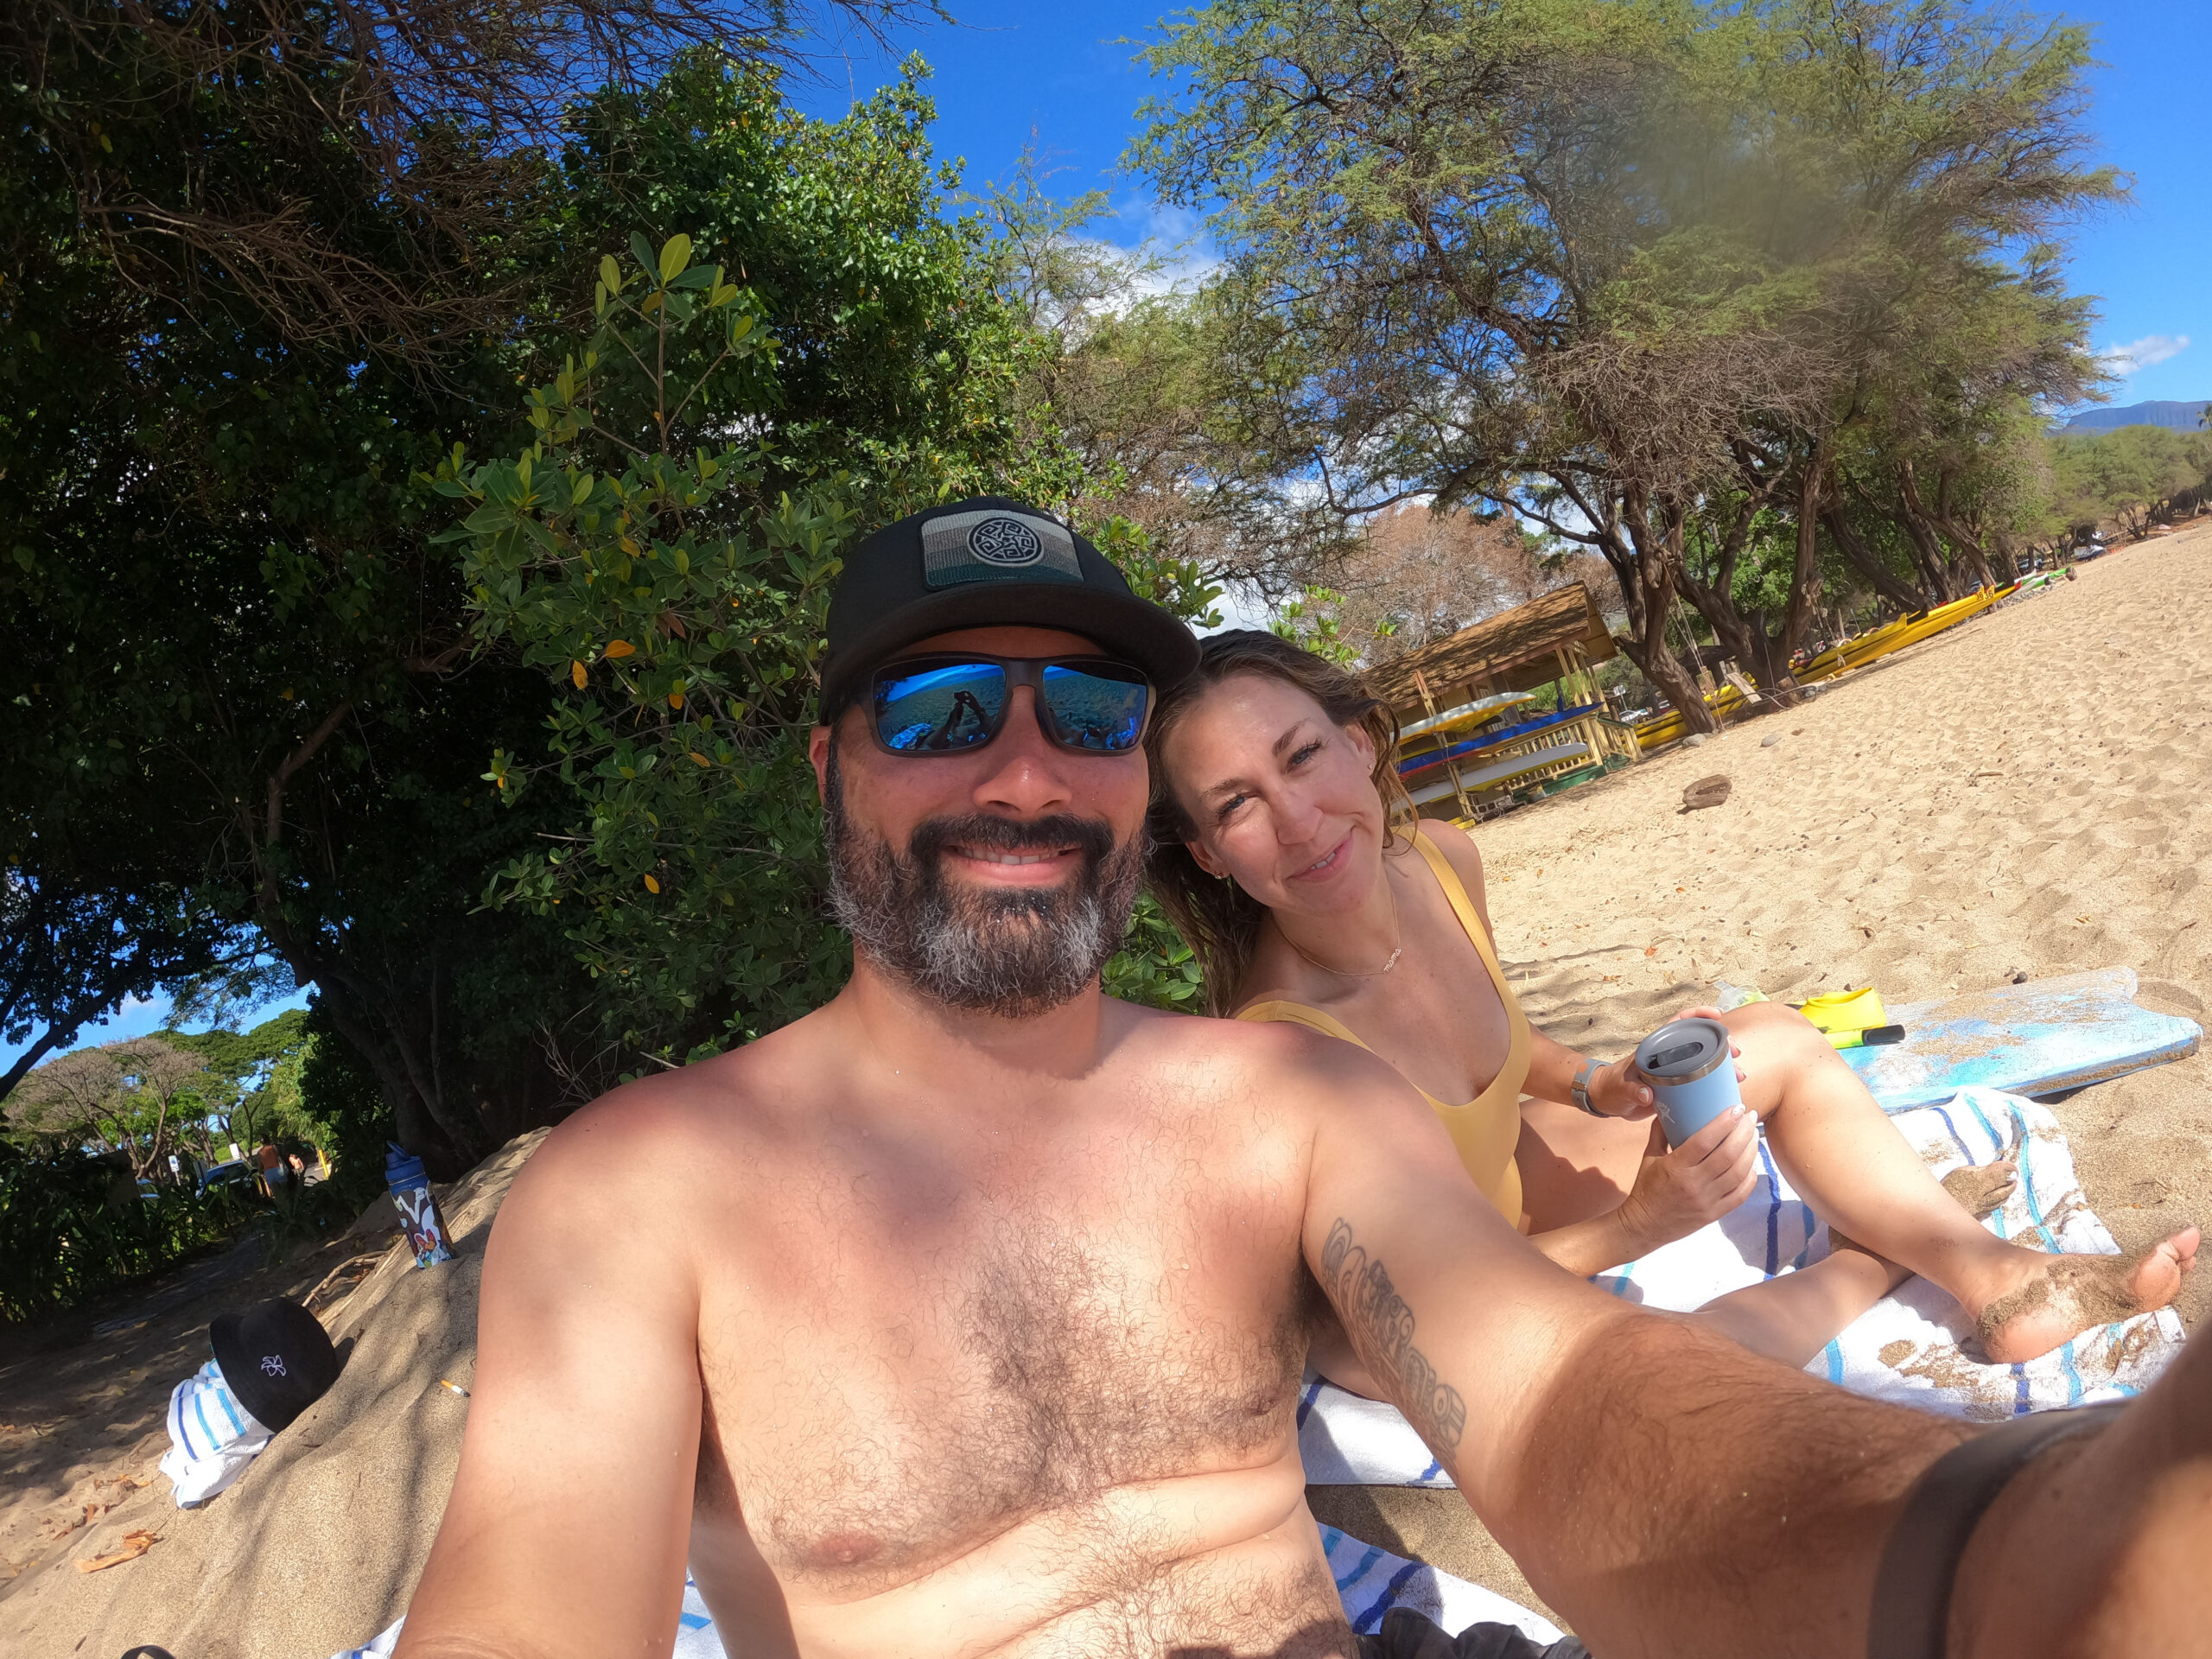 enjoying some beach time right of our propety in Maui at the Hyatt Regency #theldltravels #familytravel #maui